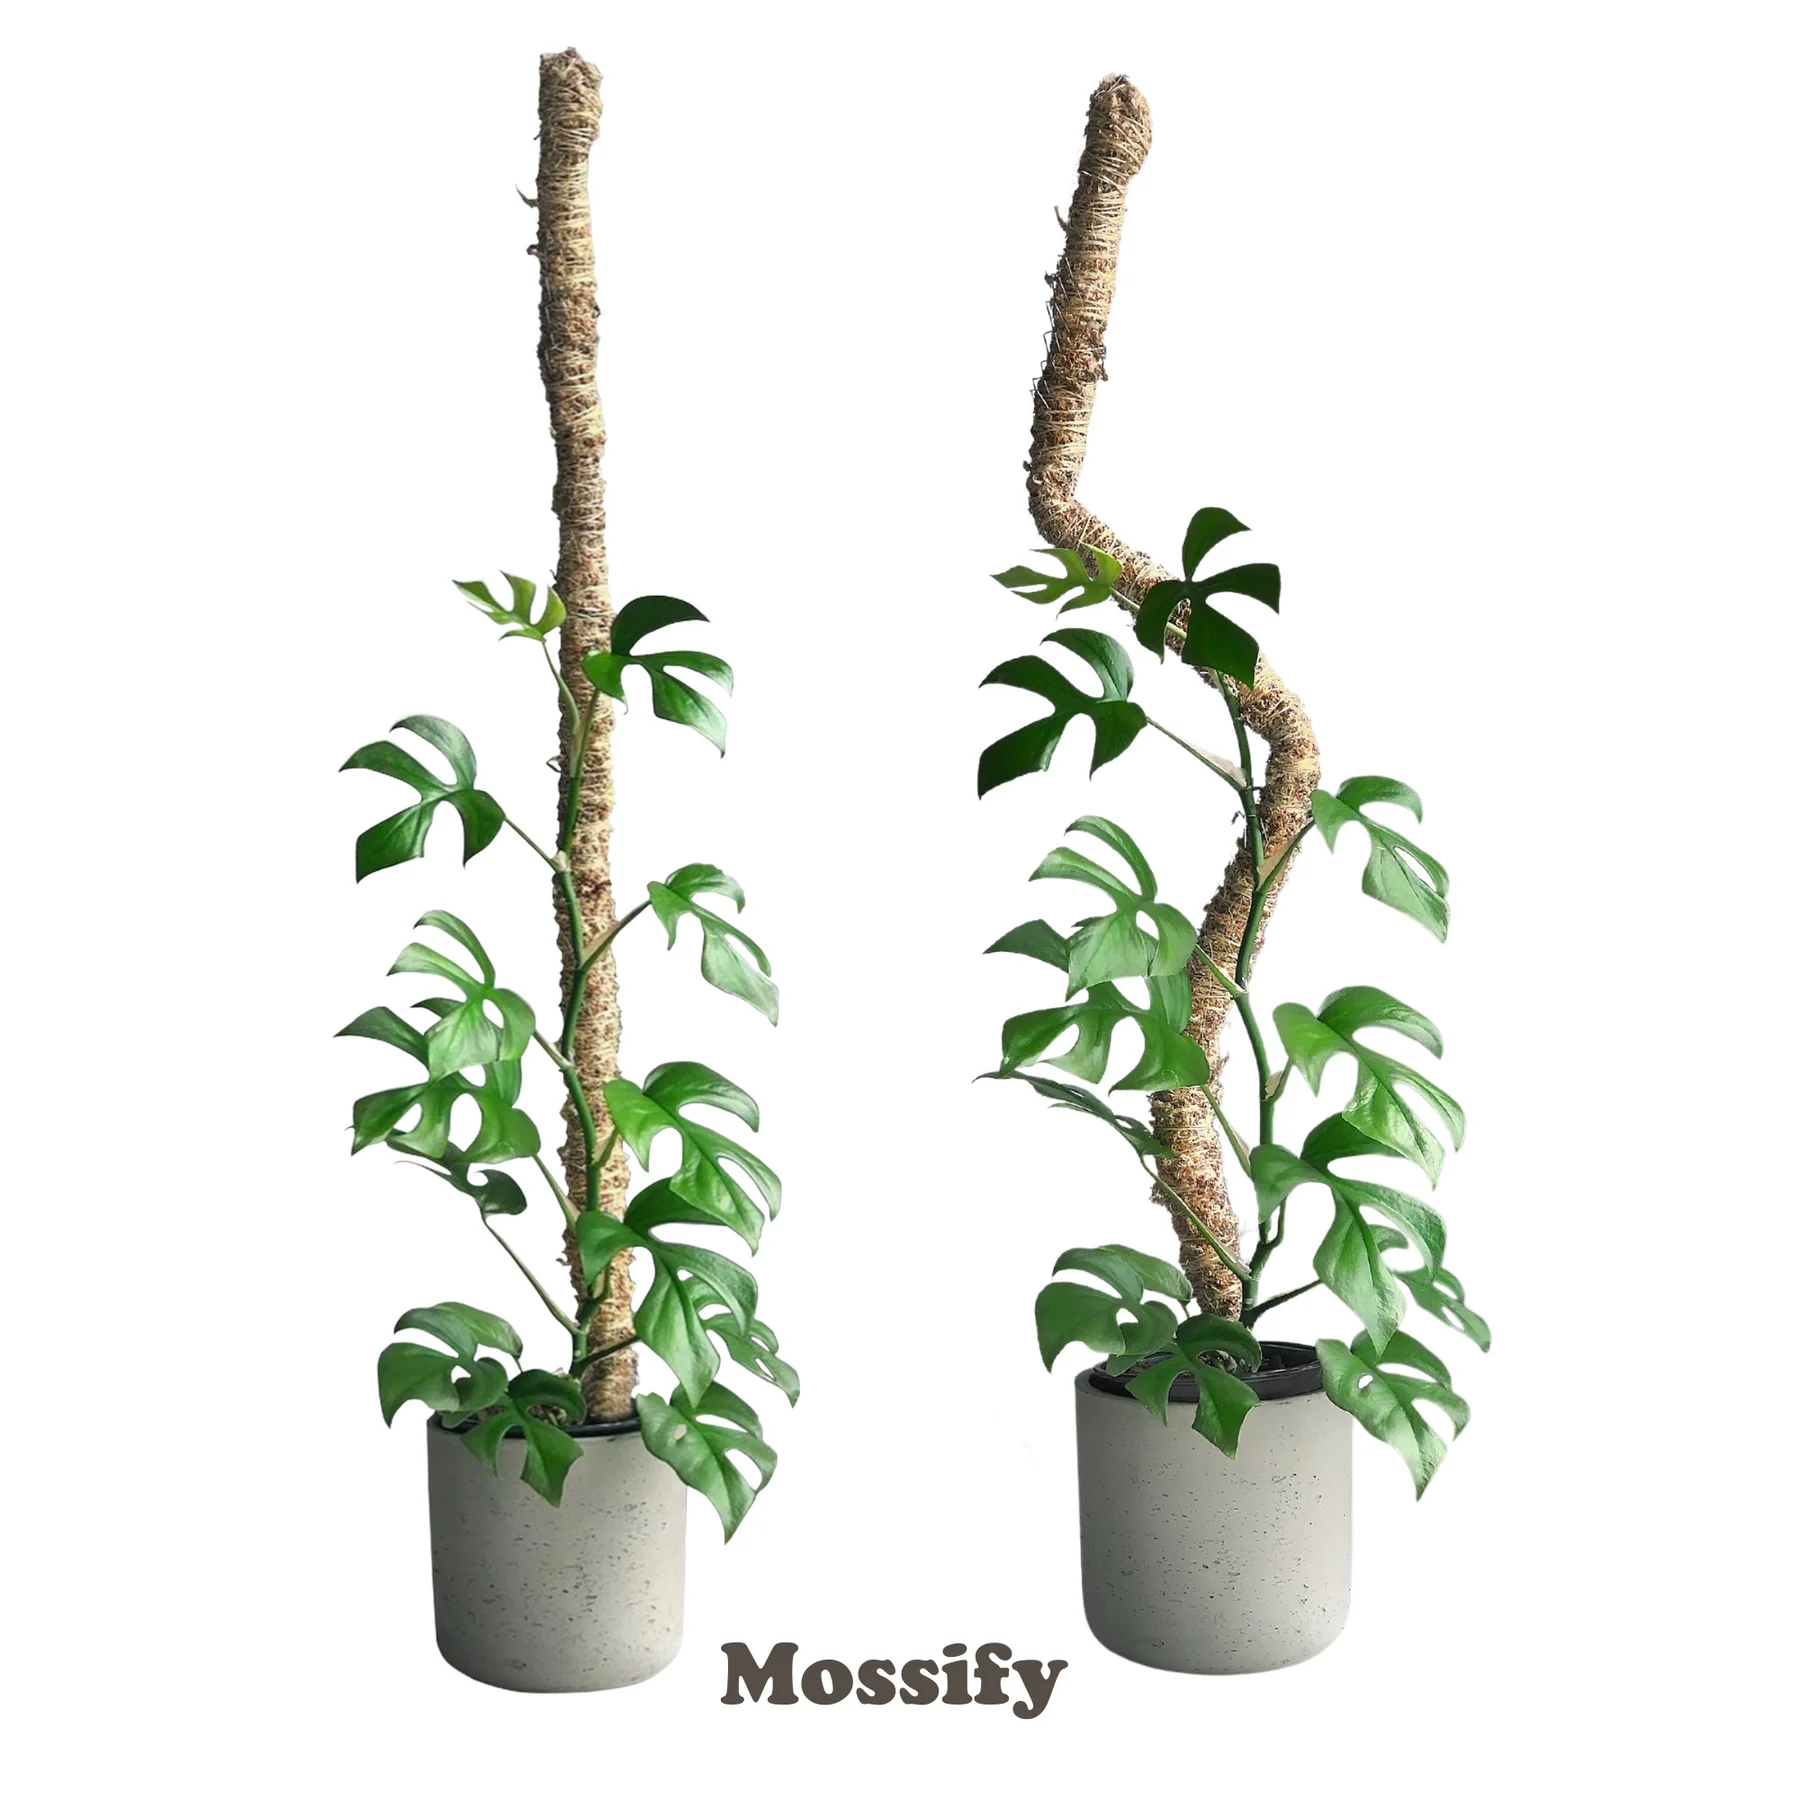 Mossify - The Original Bendable Moss Pole™